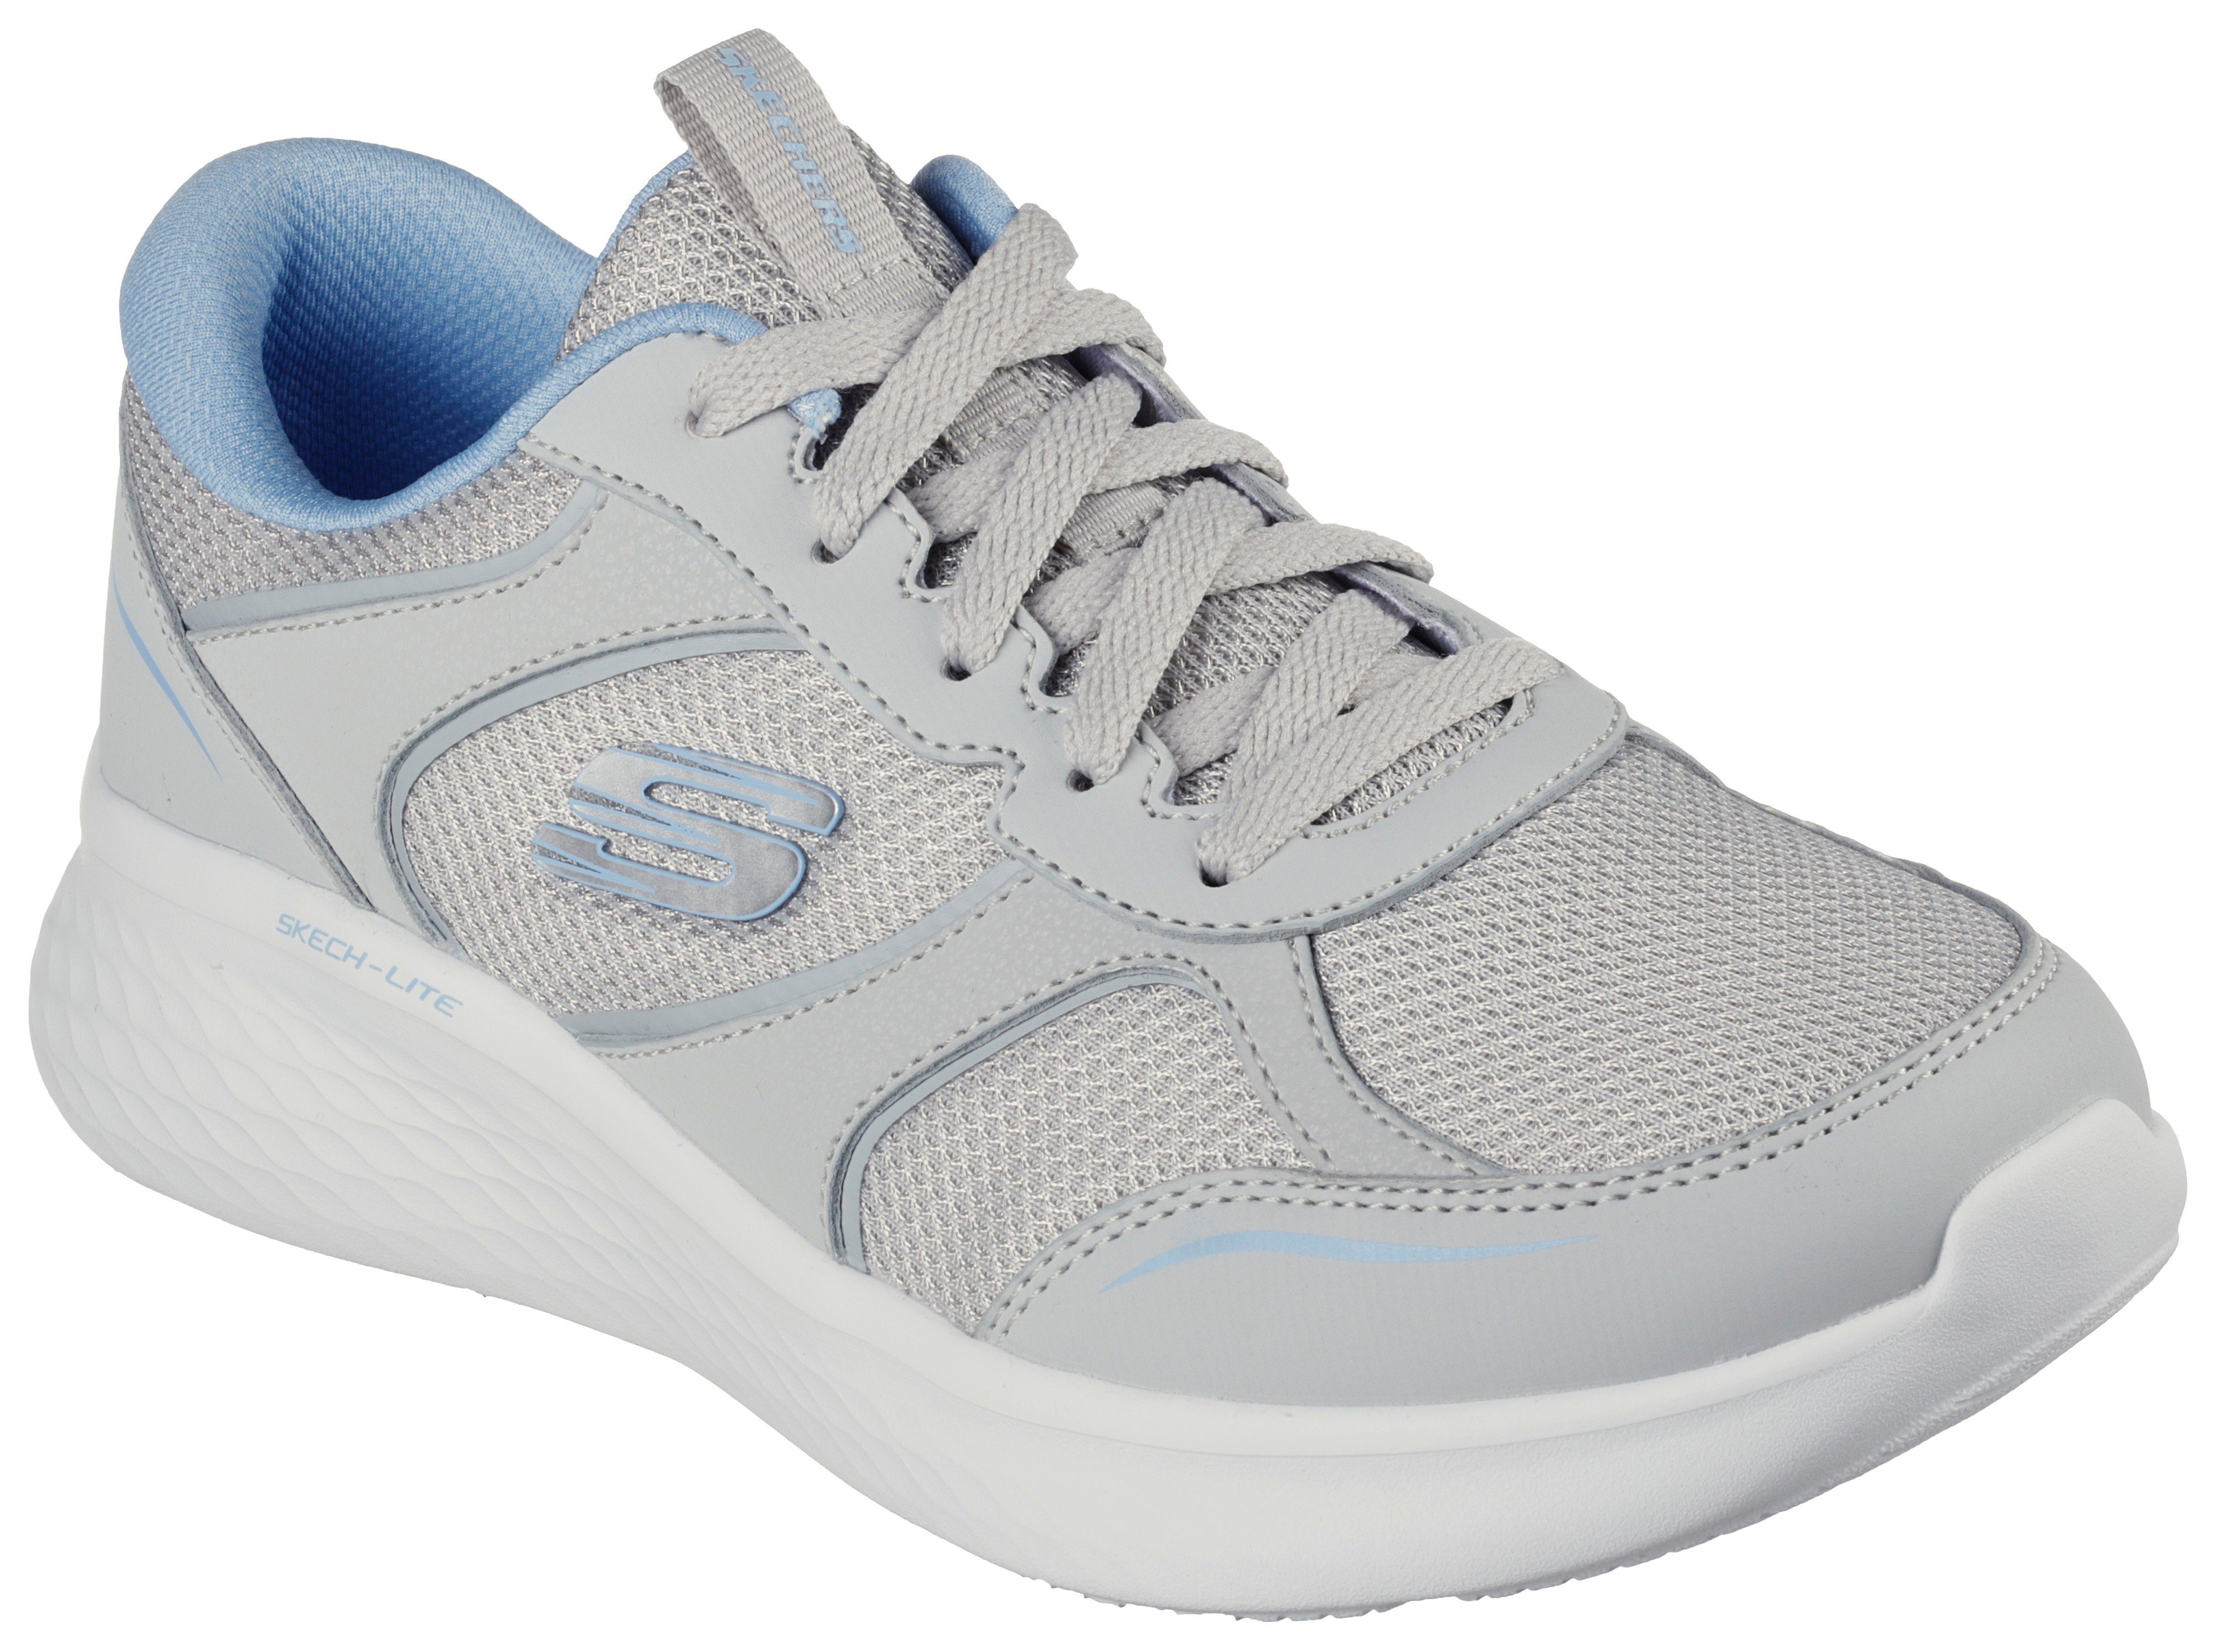 Skechers SKECH-LITE PRO - Sneaker mit Air Cooled Memory Foam-Ausstattung grau-blau